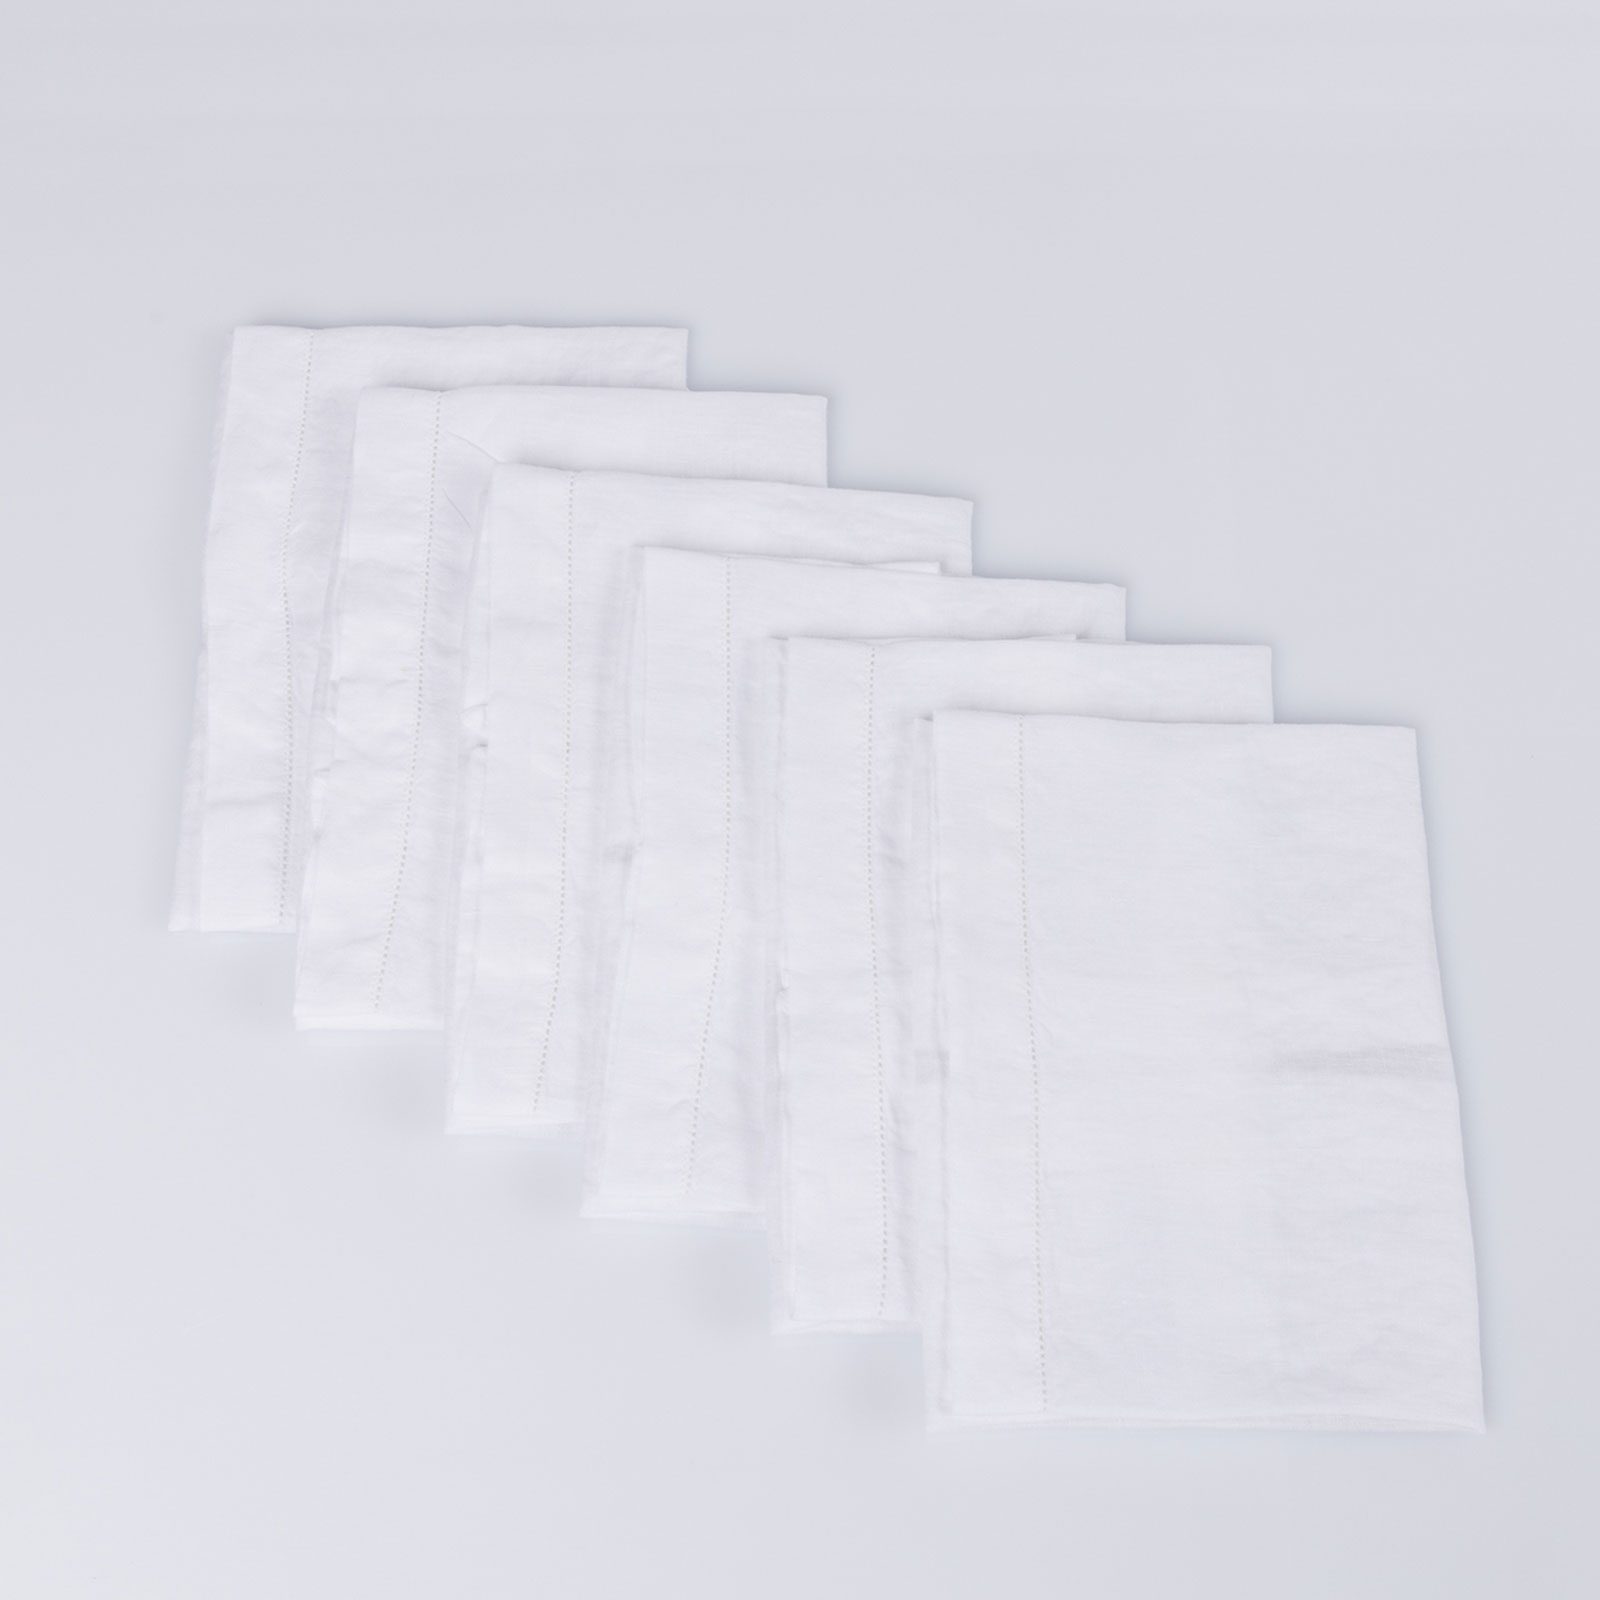 stone-washed-linen-hem-stitch-table-napkin-snow-white-49x49-2